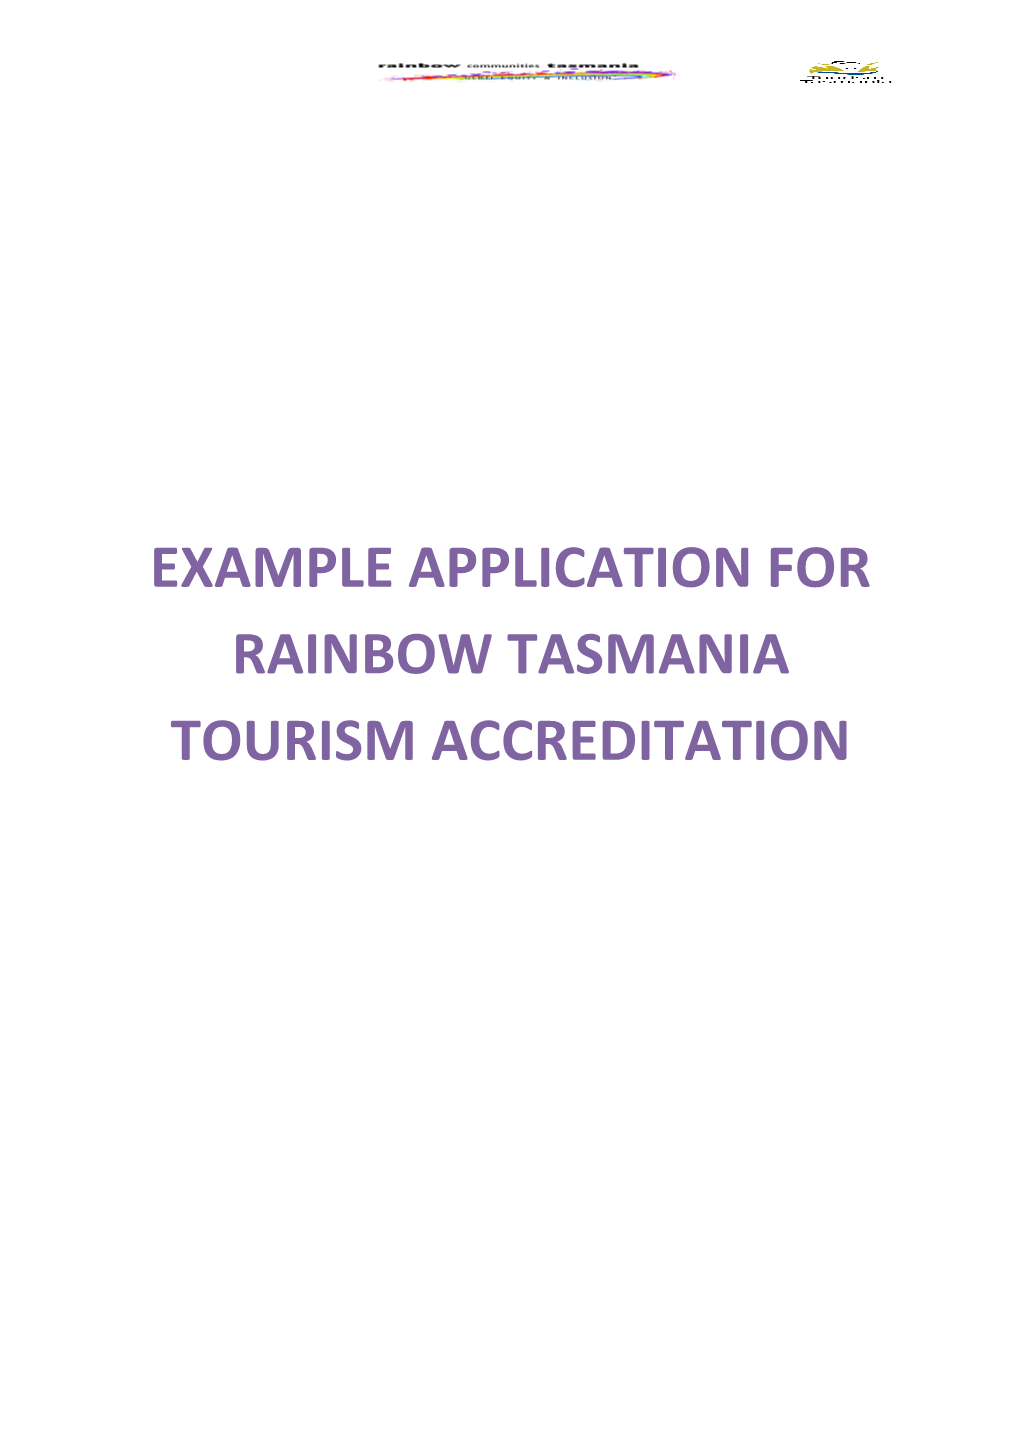 Example Application for Rainbow Tasmania Tourism Accreditation